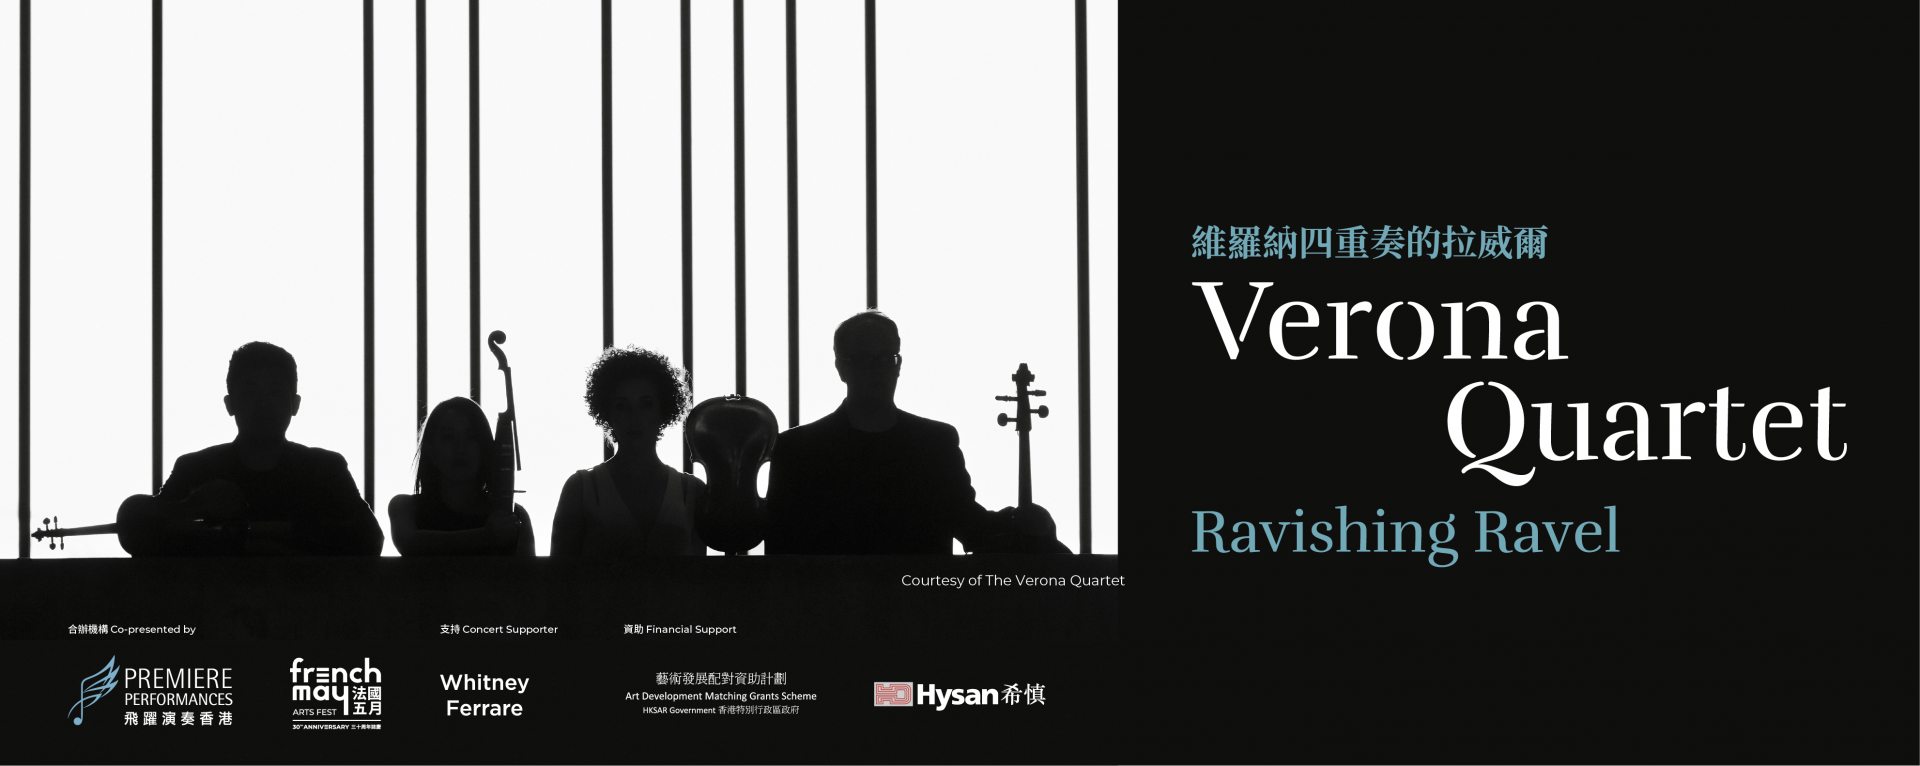 The Verona Quartet: Ravishing Ravel